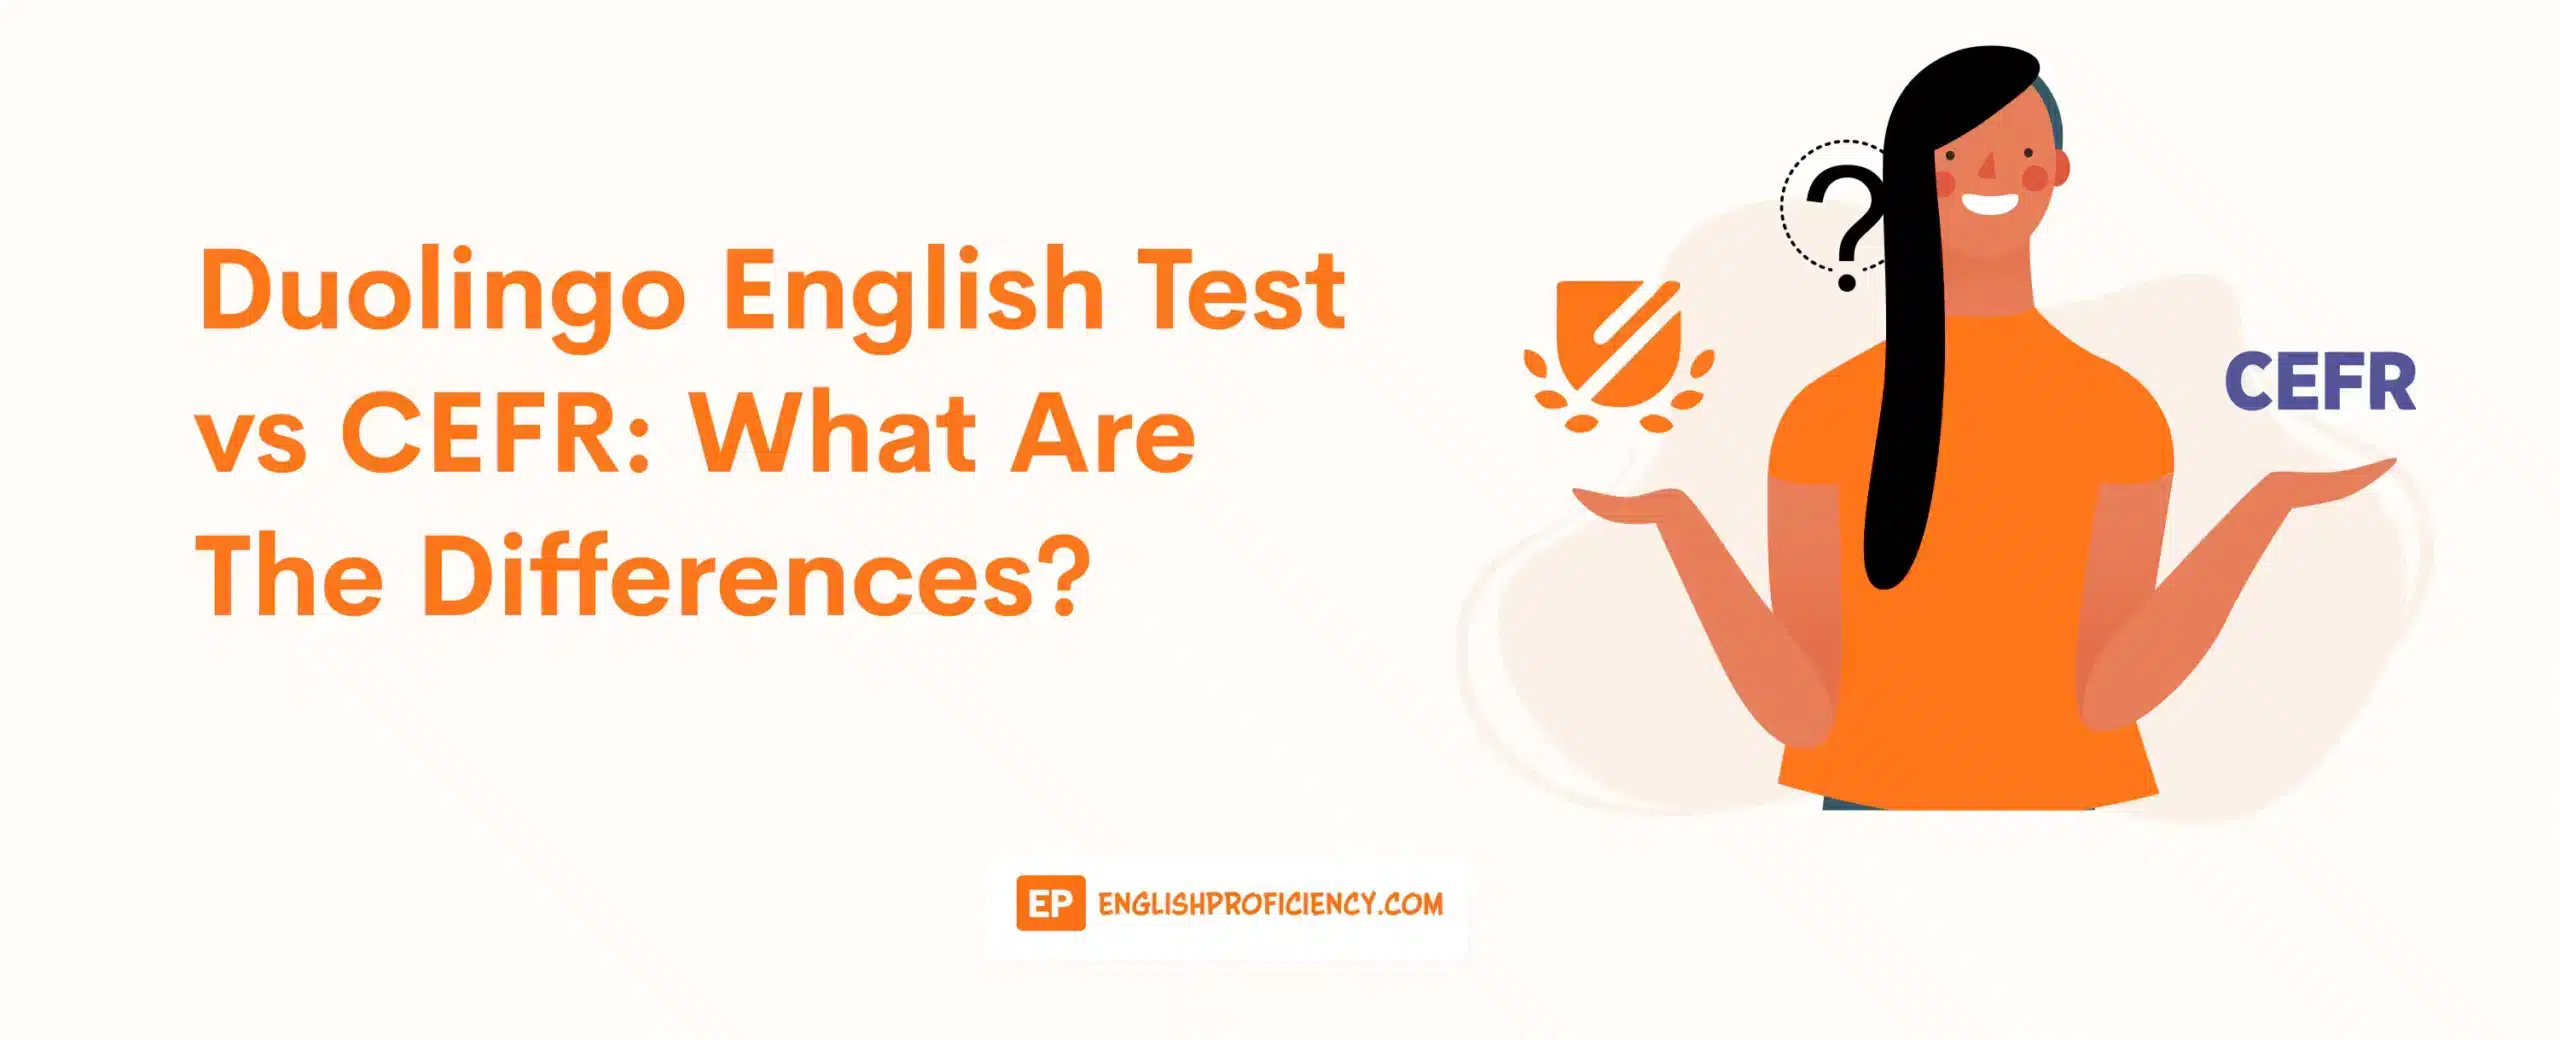 Duolingo English Test vs CEFR